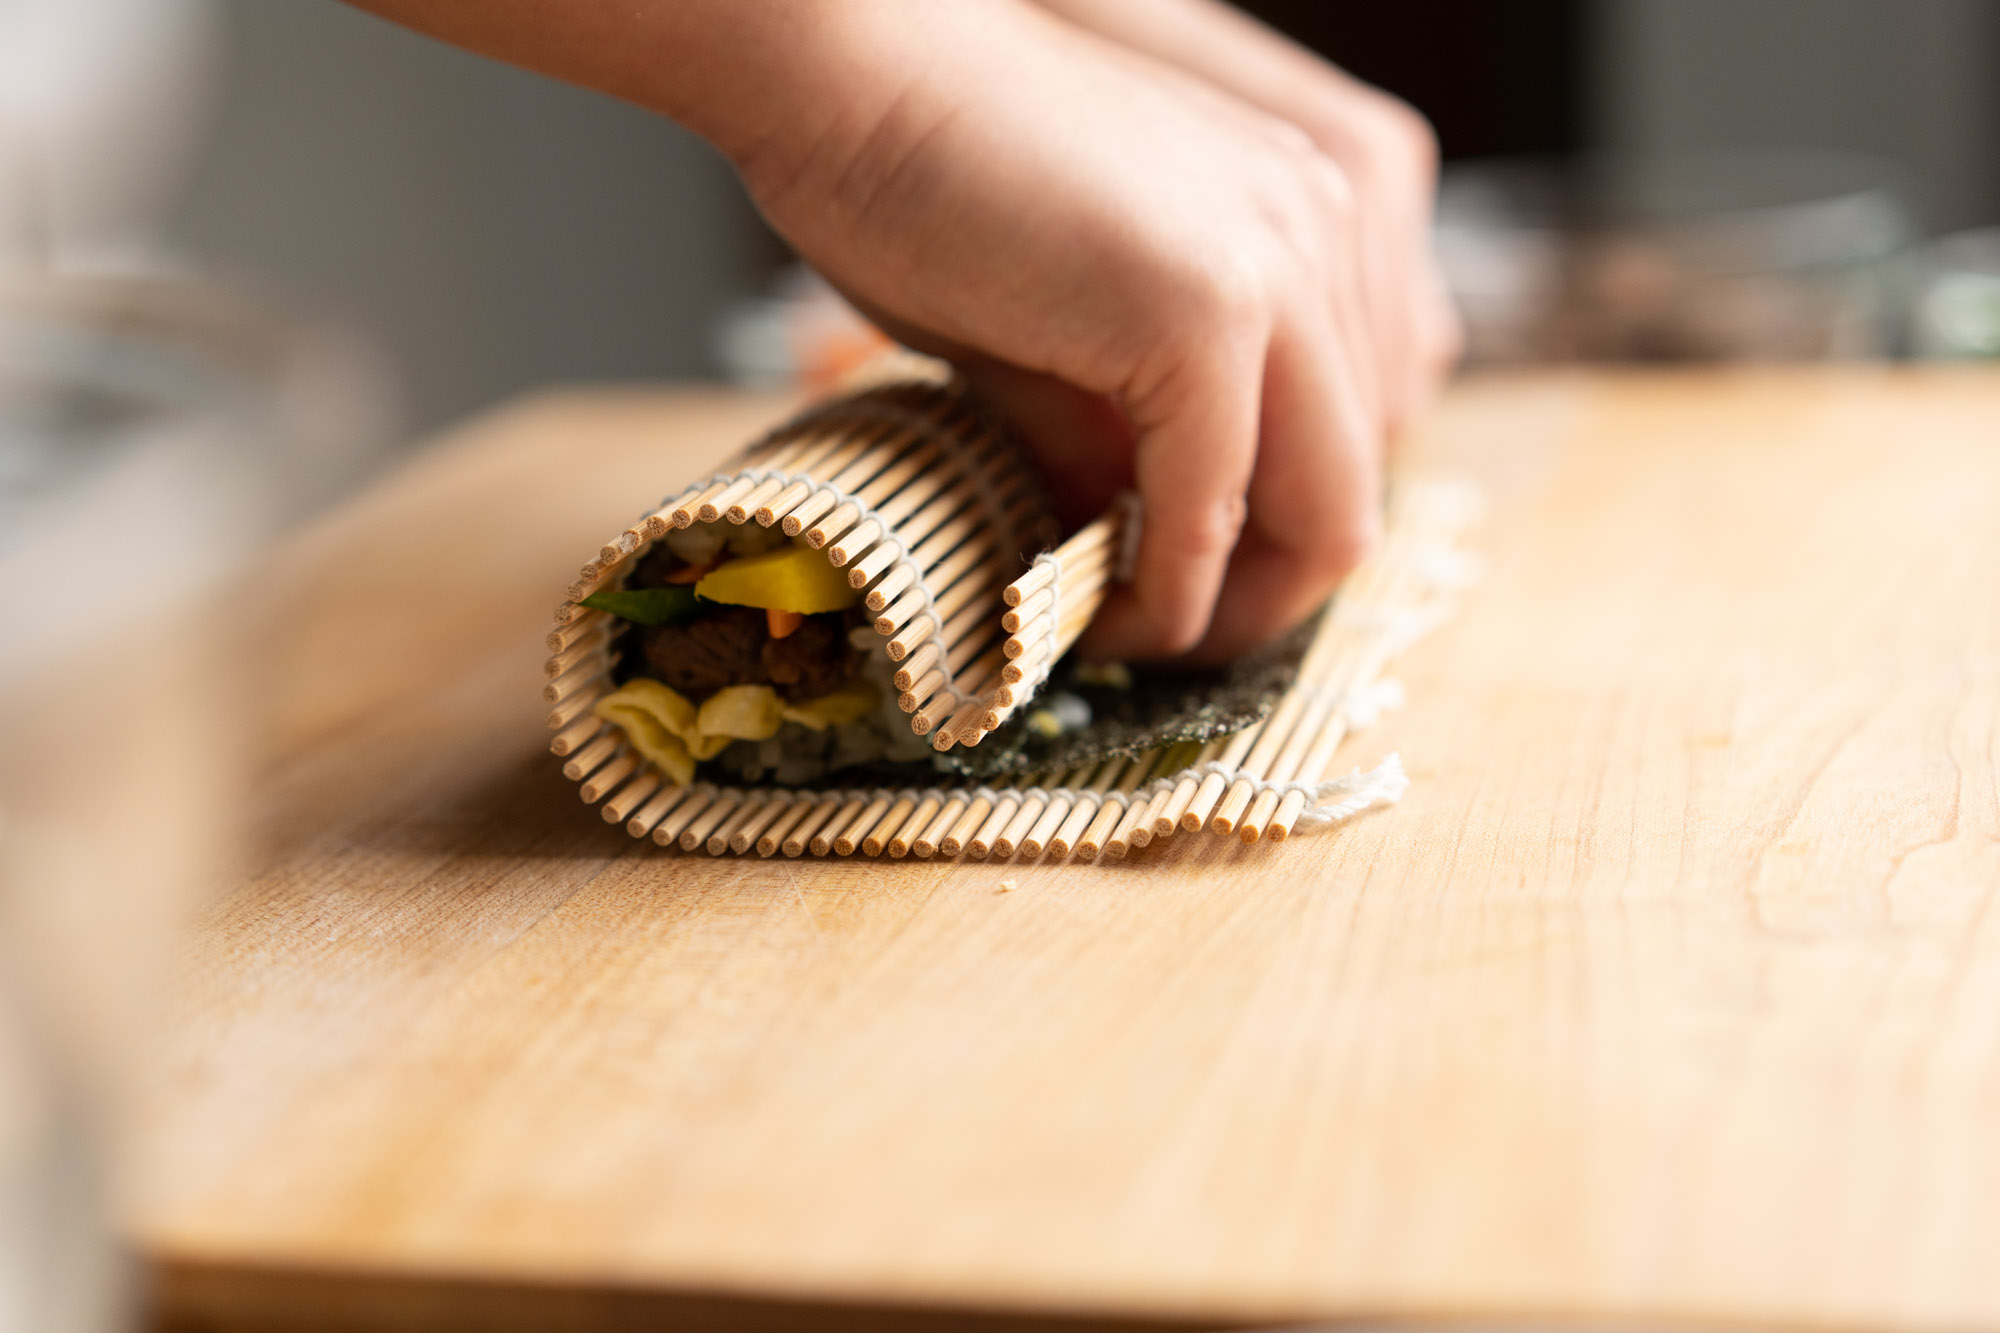 Kimbap Recipe (Korean Seaweed Rice 'Sushi' Rolls) - Hungry Huy